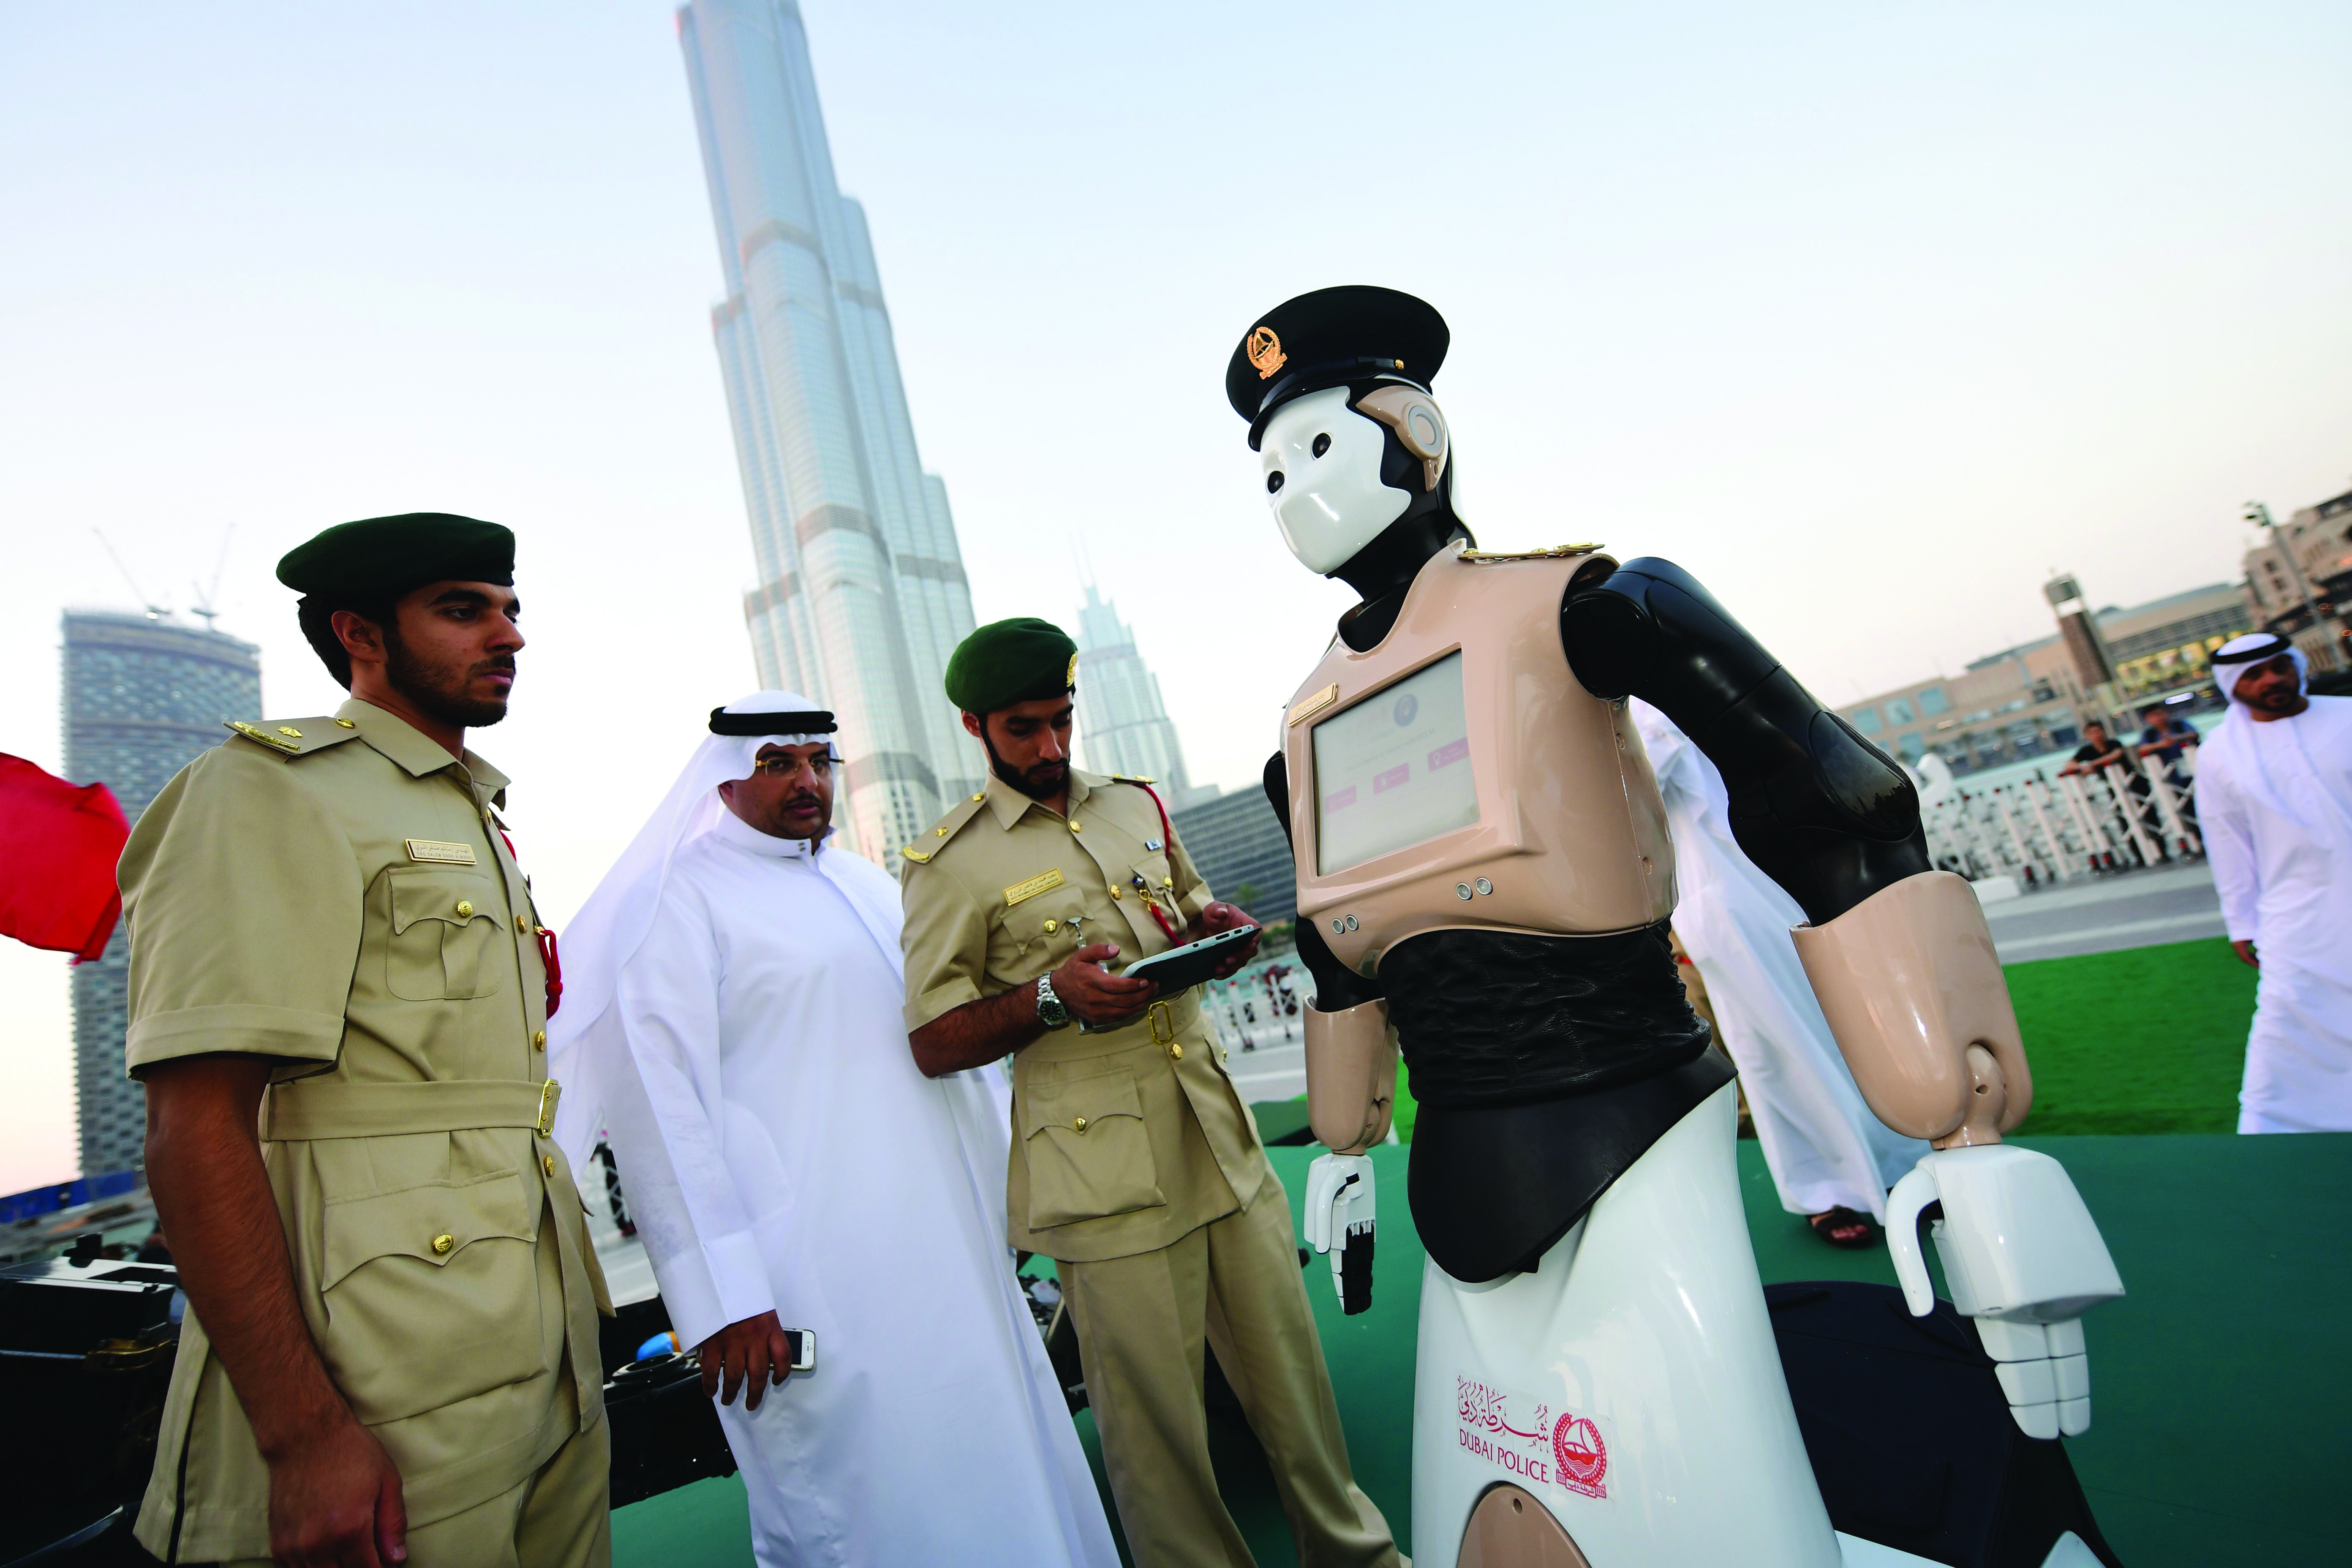 UAE-DUBAI-POLICE-ROBOT - Police Chief